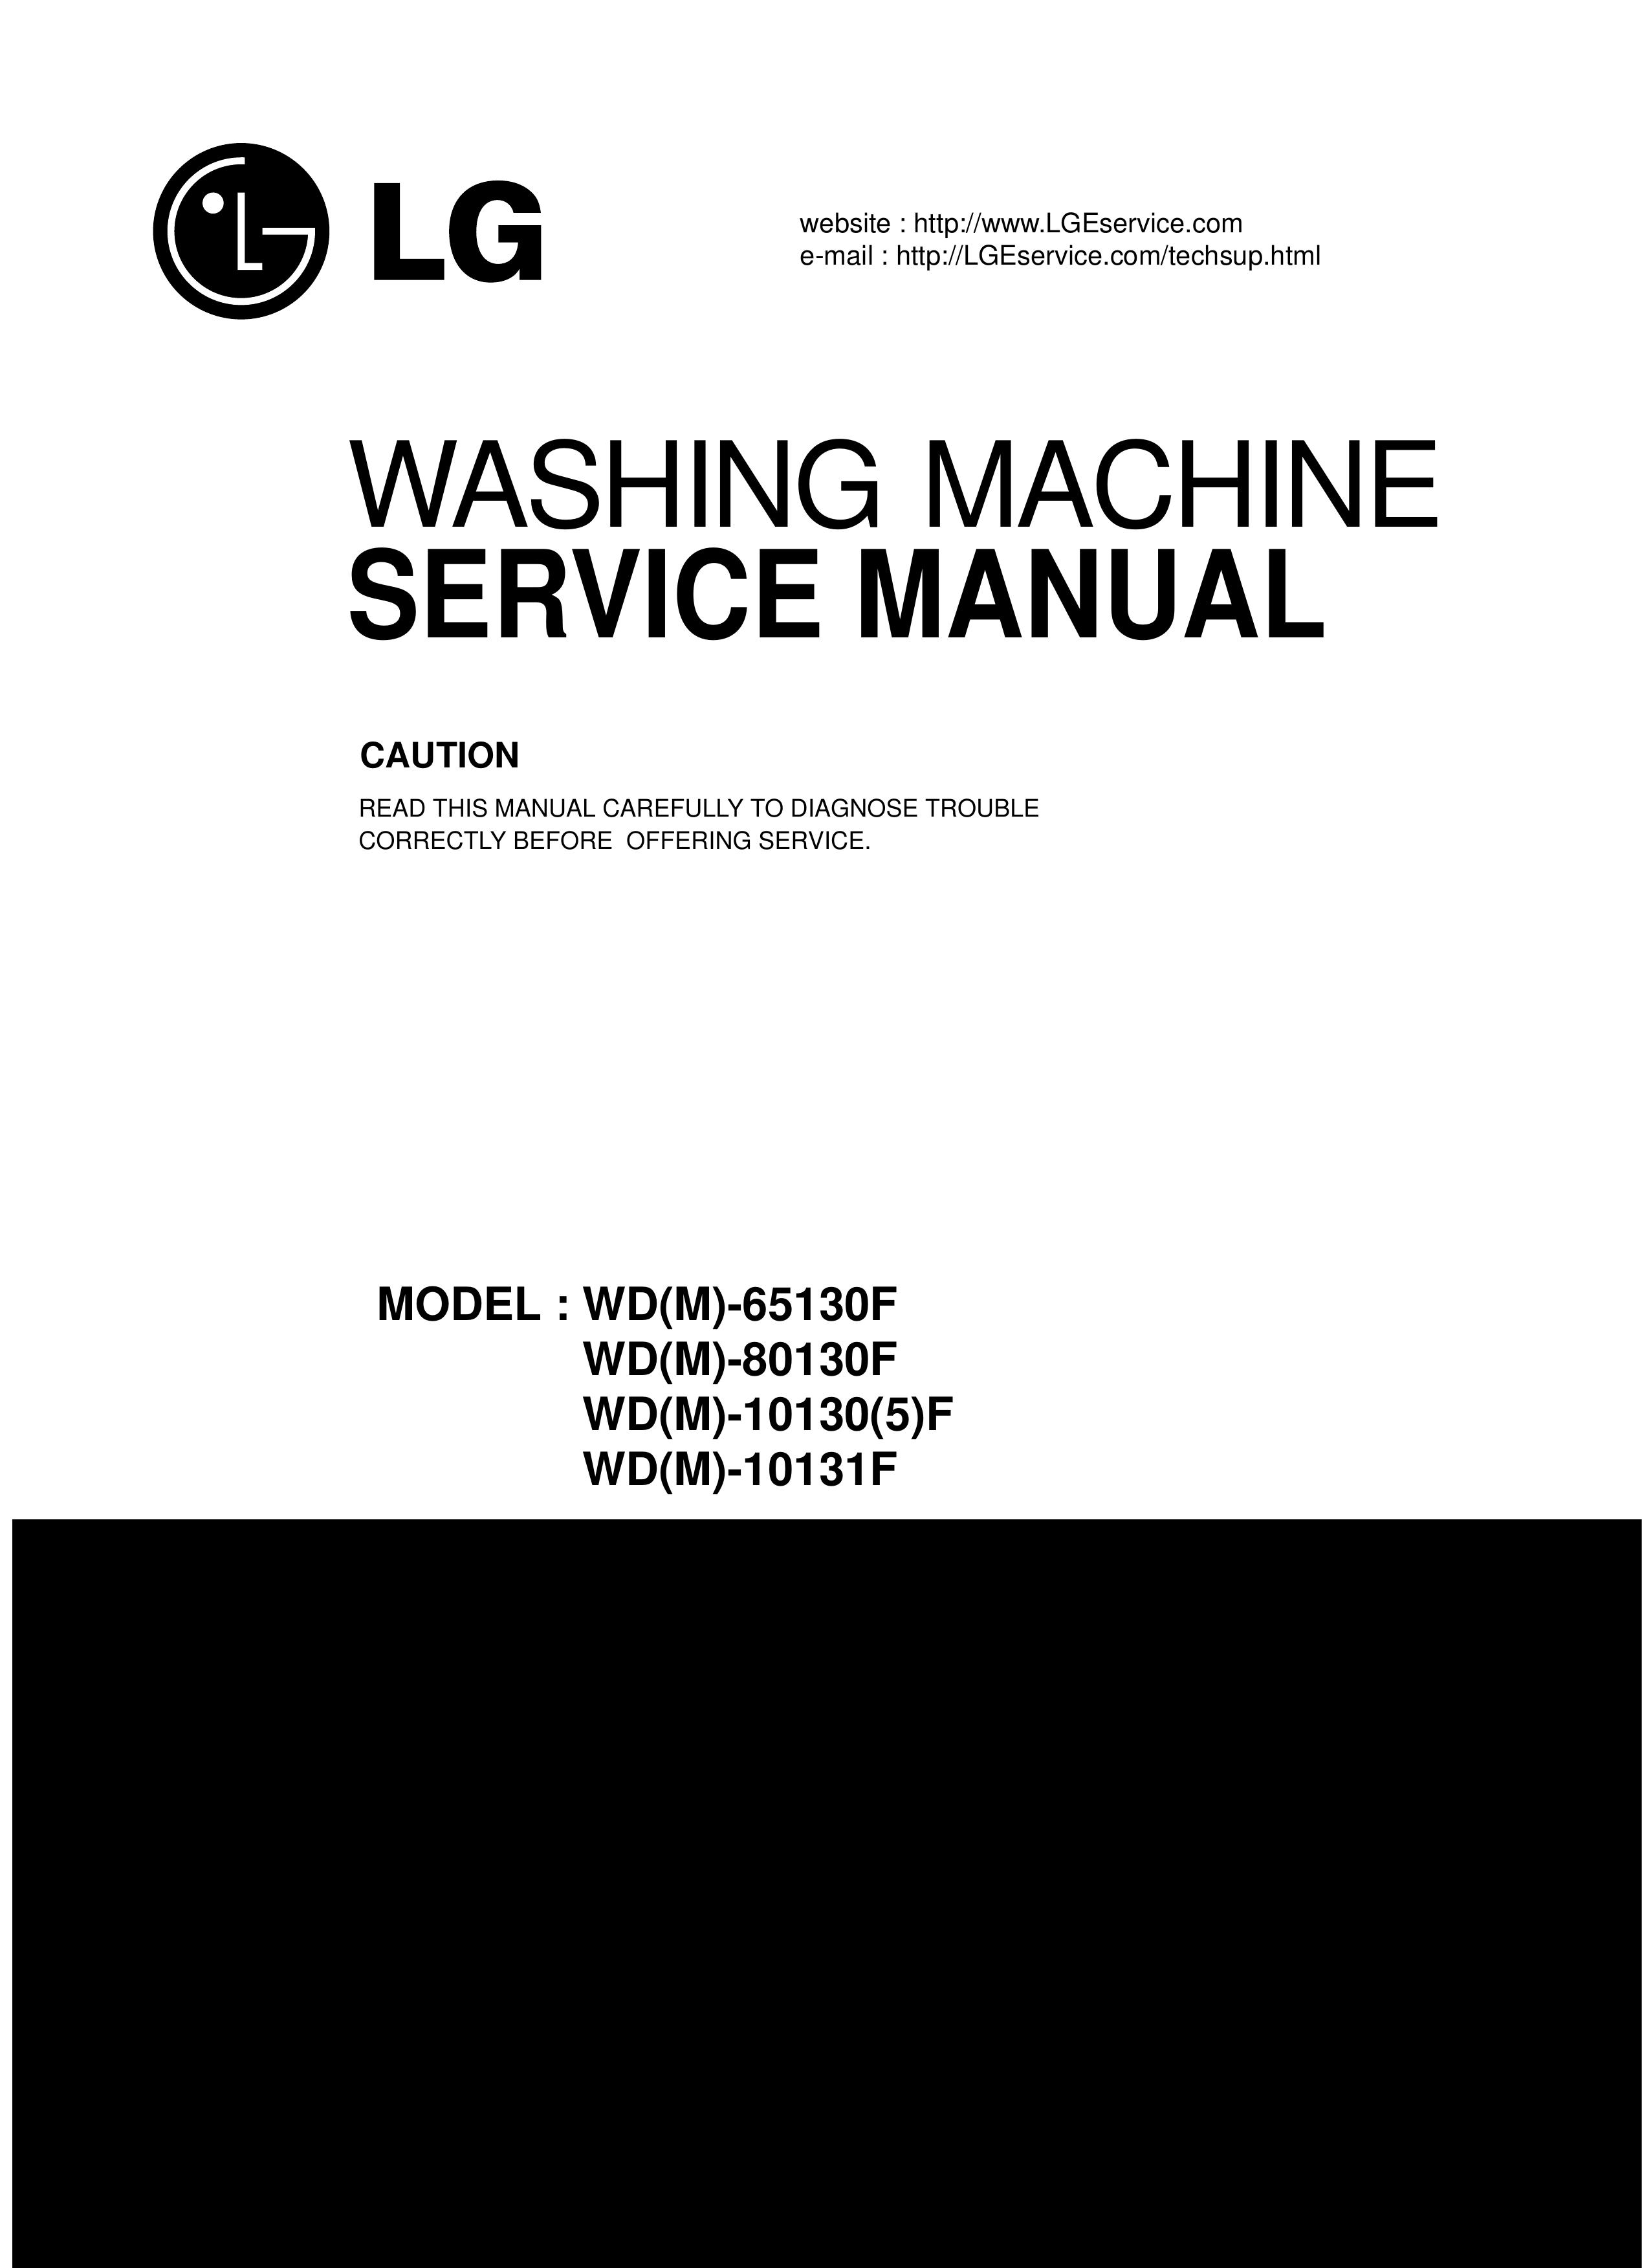 LG Electronics WD(M)-10131F Washer User Manual